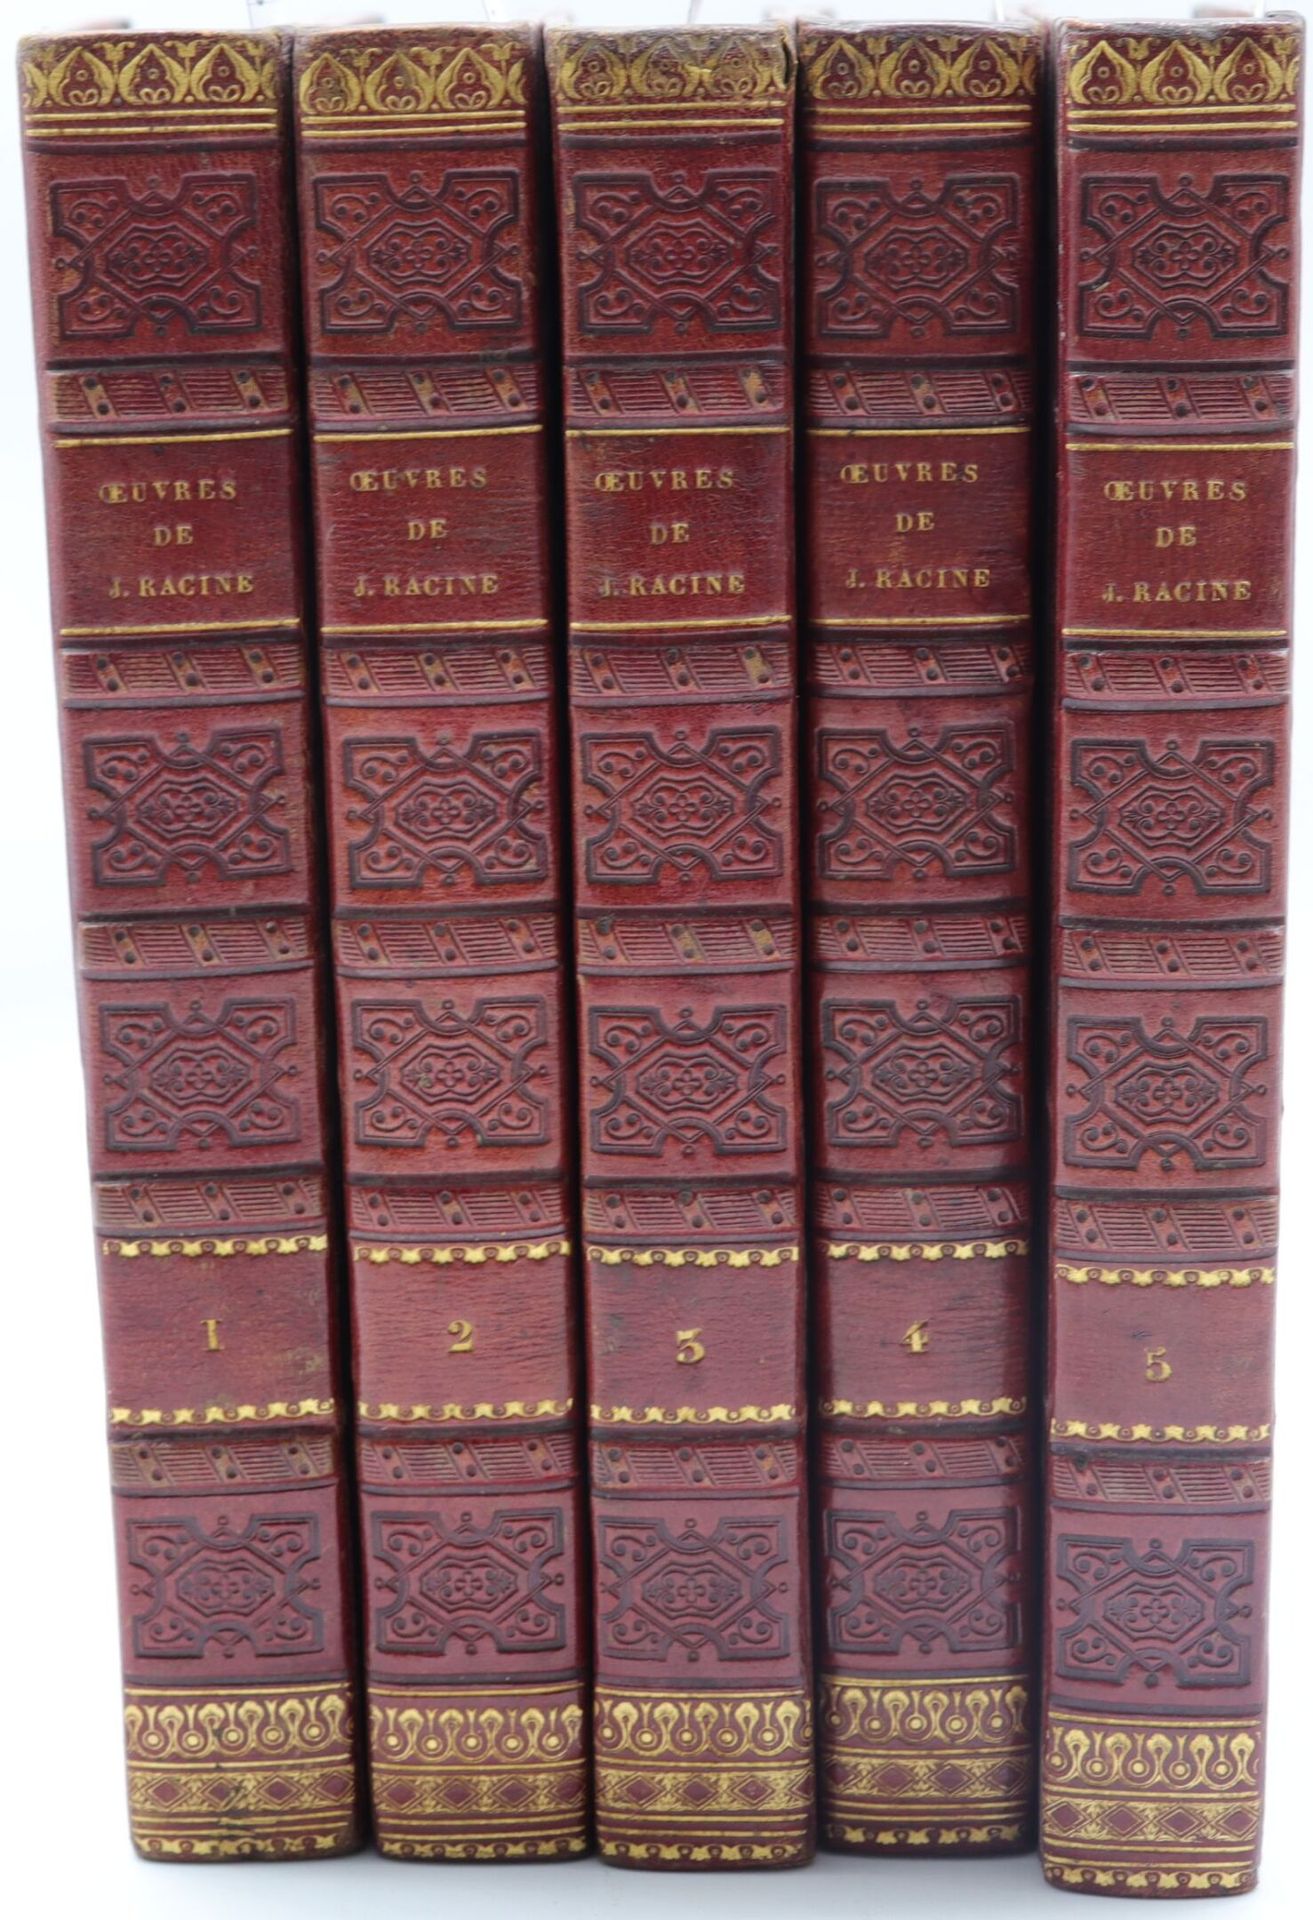 Null RACINE.作品集》。巴黎，Pinard，1829年，5卷8册，半小牛皮，有边角，书脊有棱角和装饰（当代装订）。第1卷的边缘有些许狐臭和斑点。1.
&hellip;